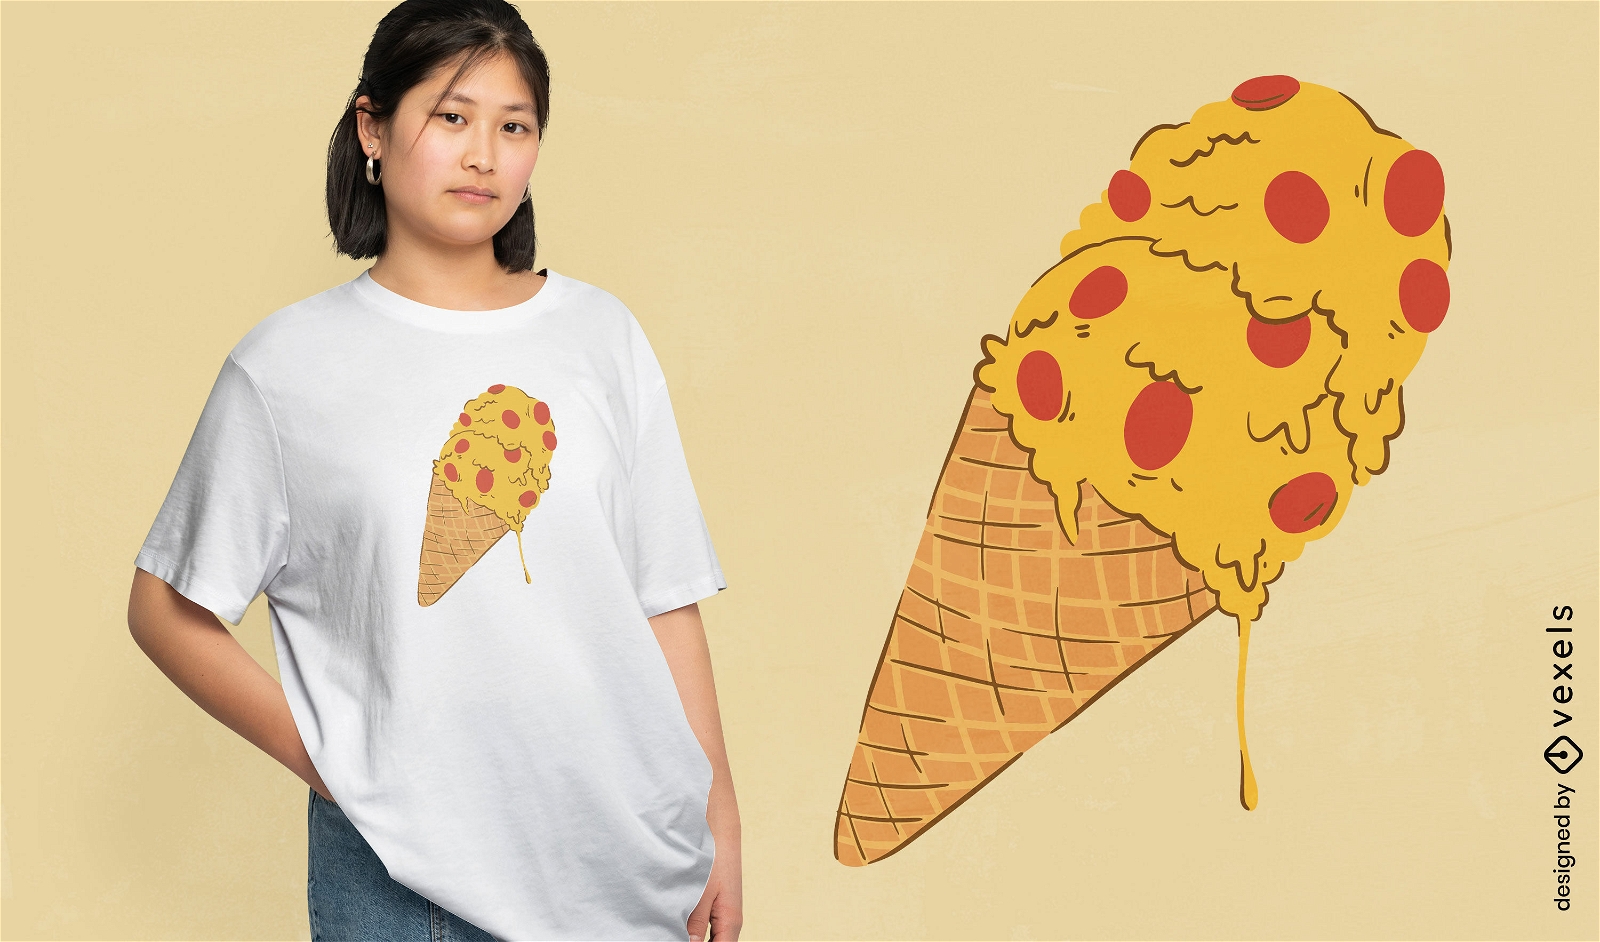 Dise?o de camiseta de cono de helado de pizza